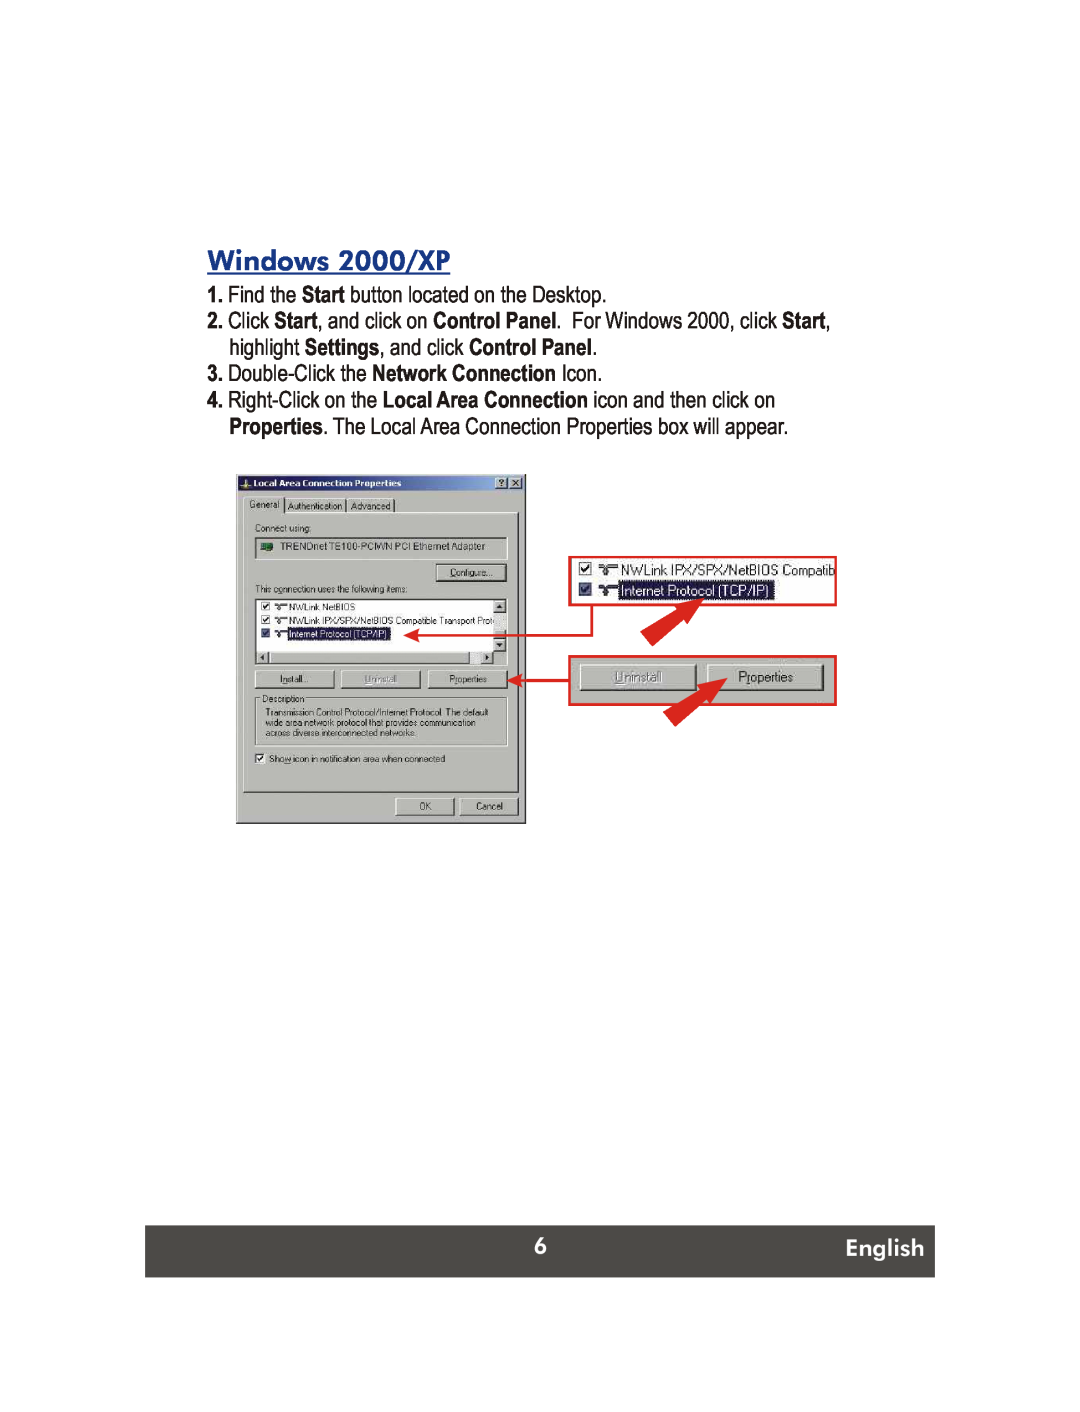 TRENDnet TEW-453APB, Net Spot Wireless Access Point Windows 2000/XP, Find the Start button located on the Desktop, English 